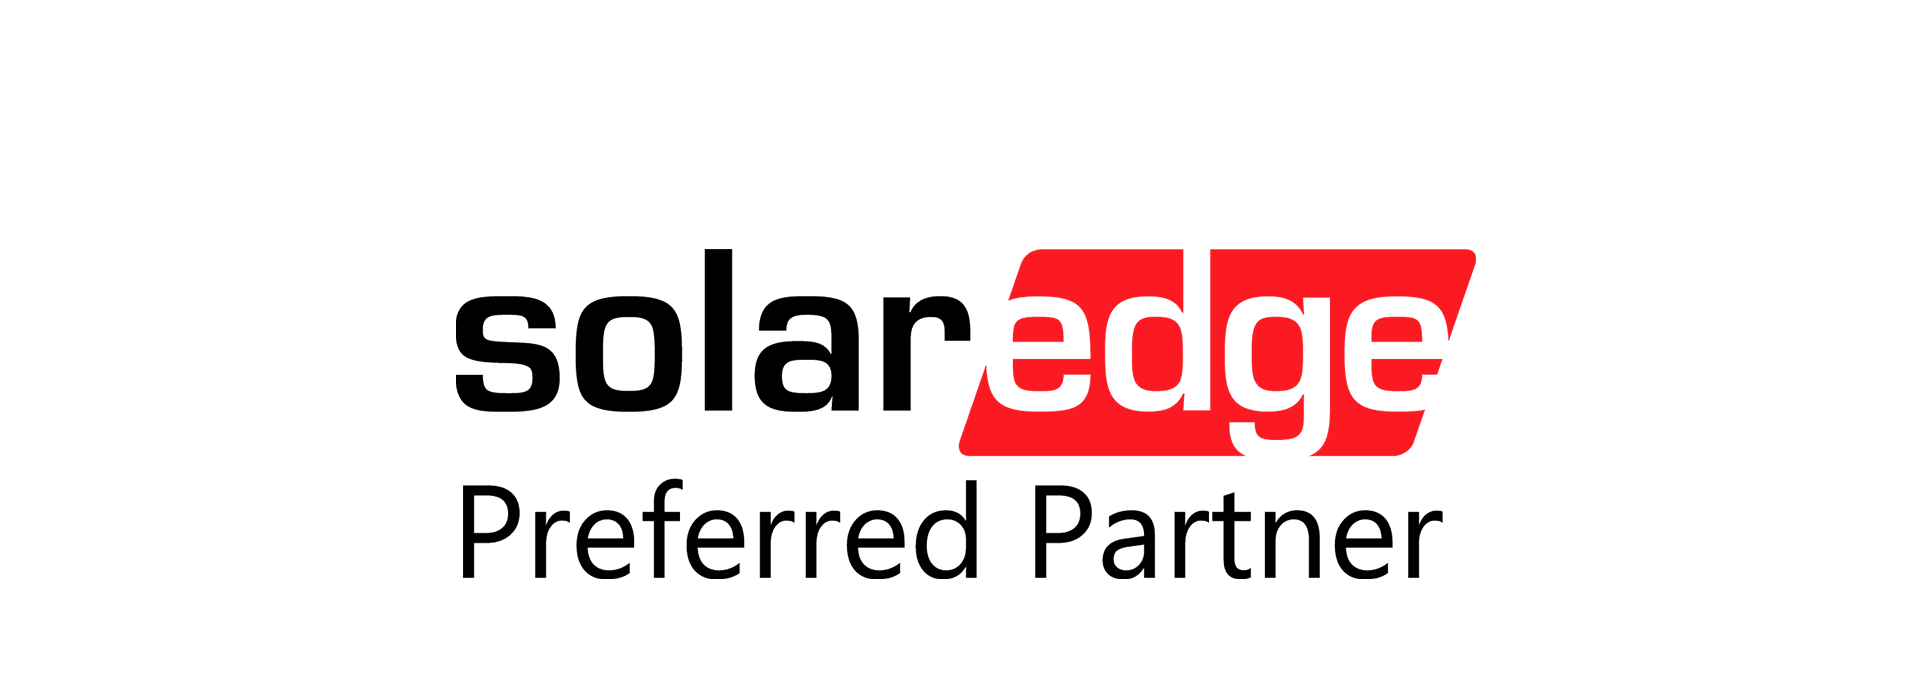 A solar edge preferred partner logo on a white background